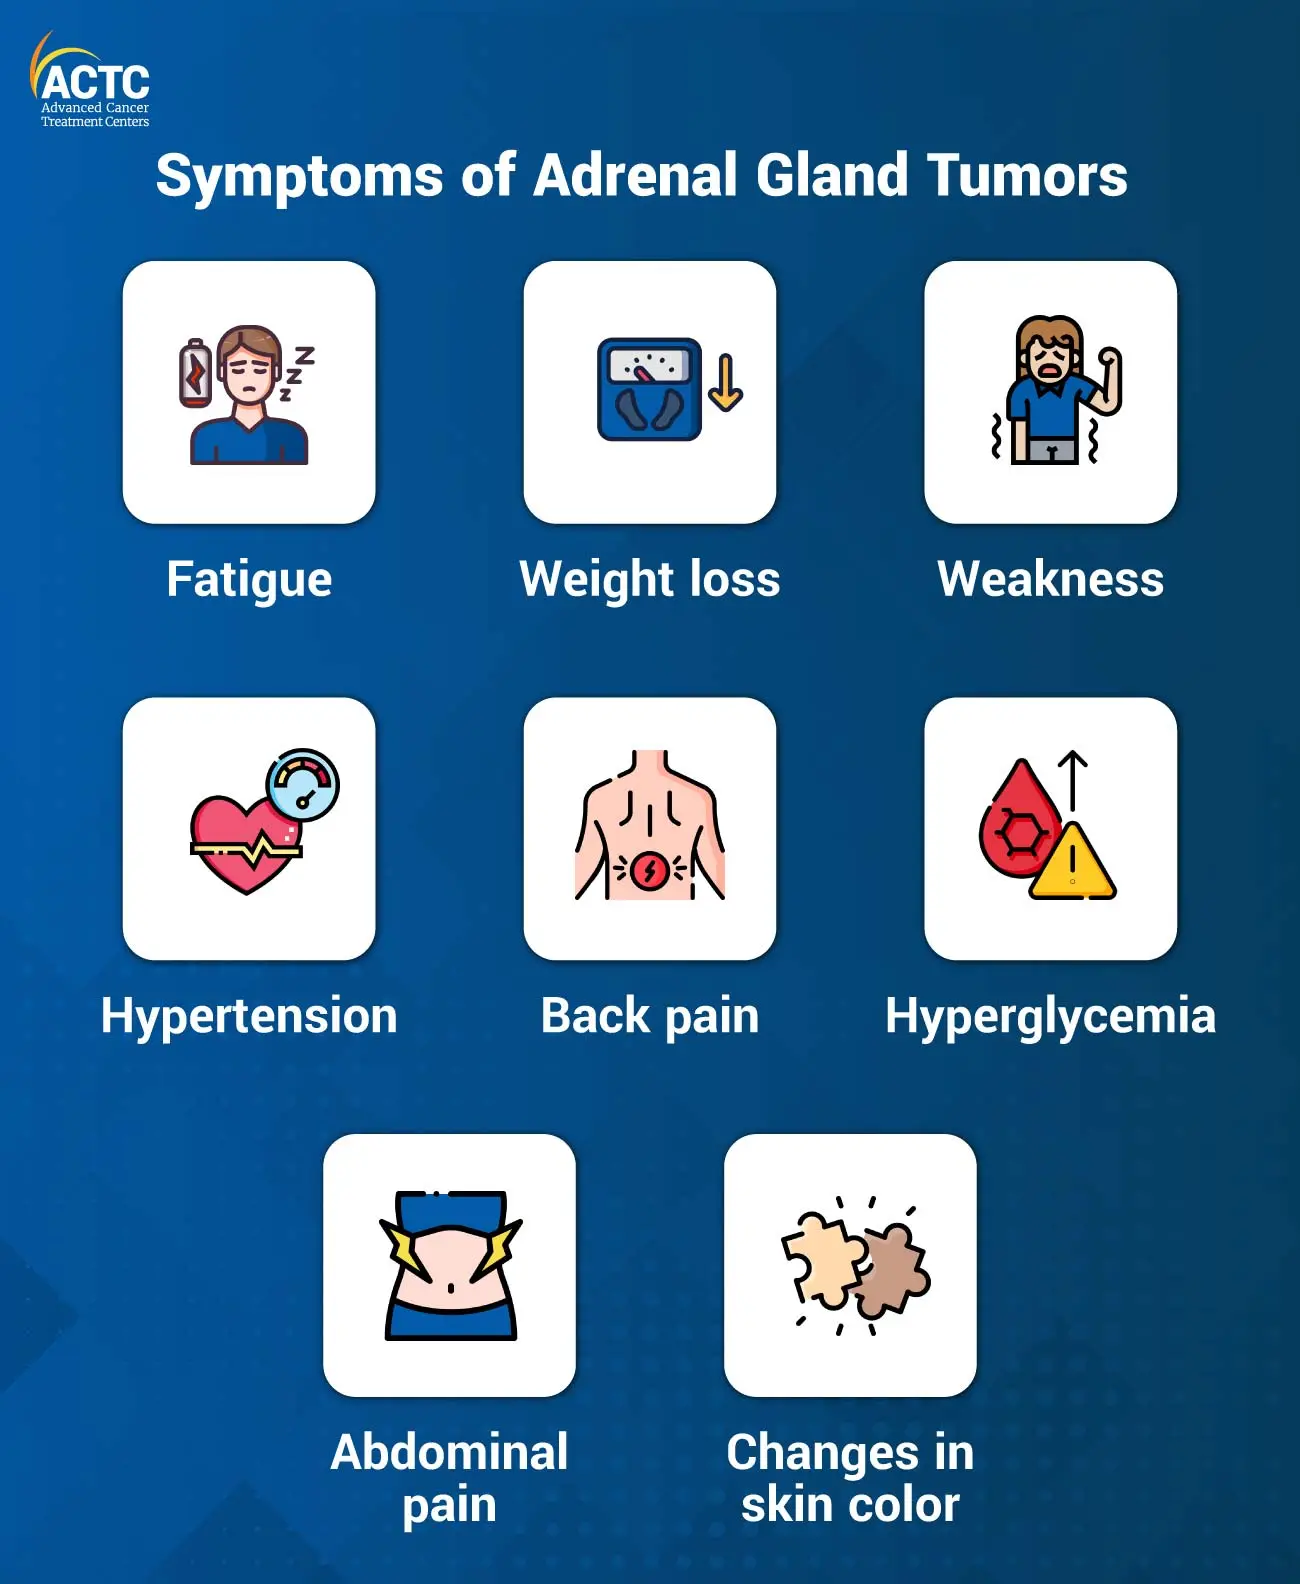 Symptoms of Adrenal Gland Tumors